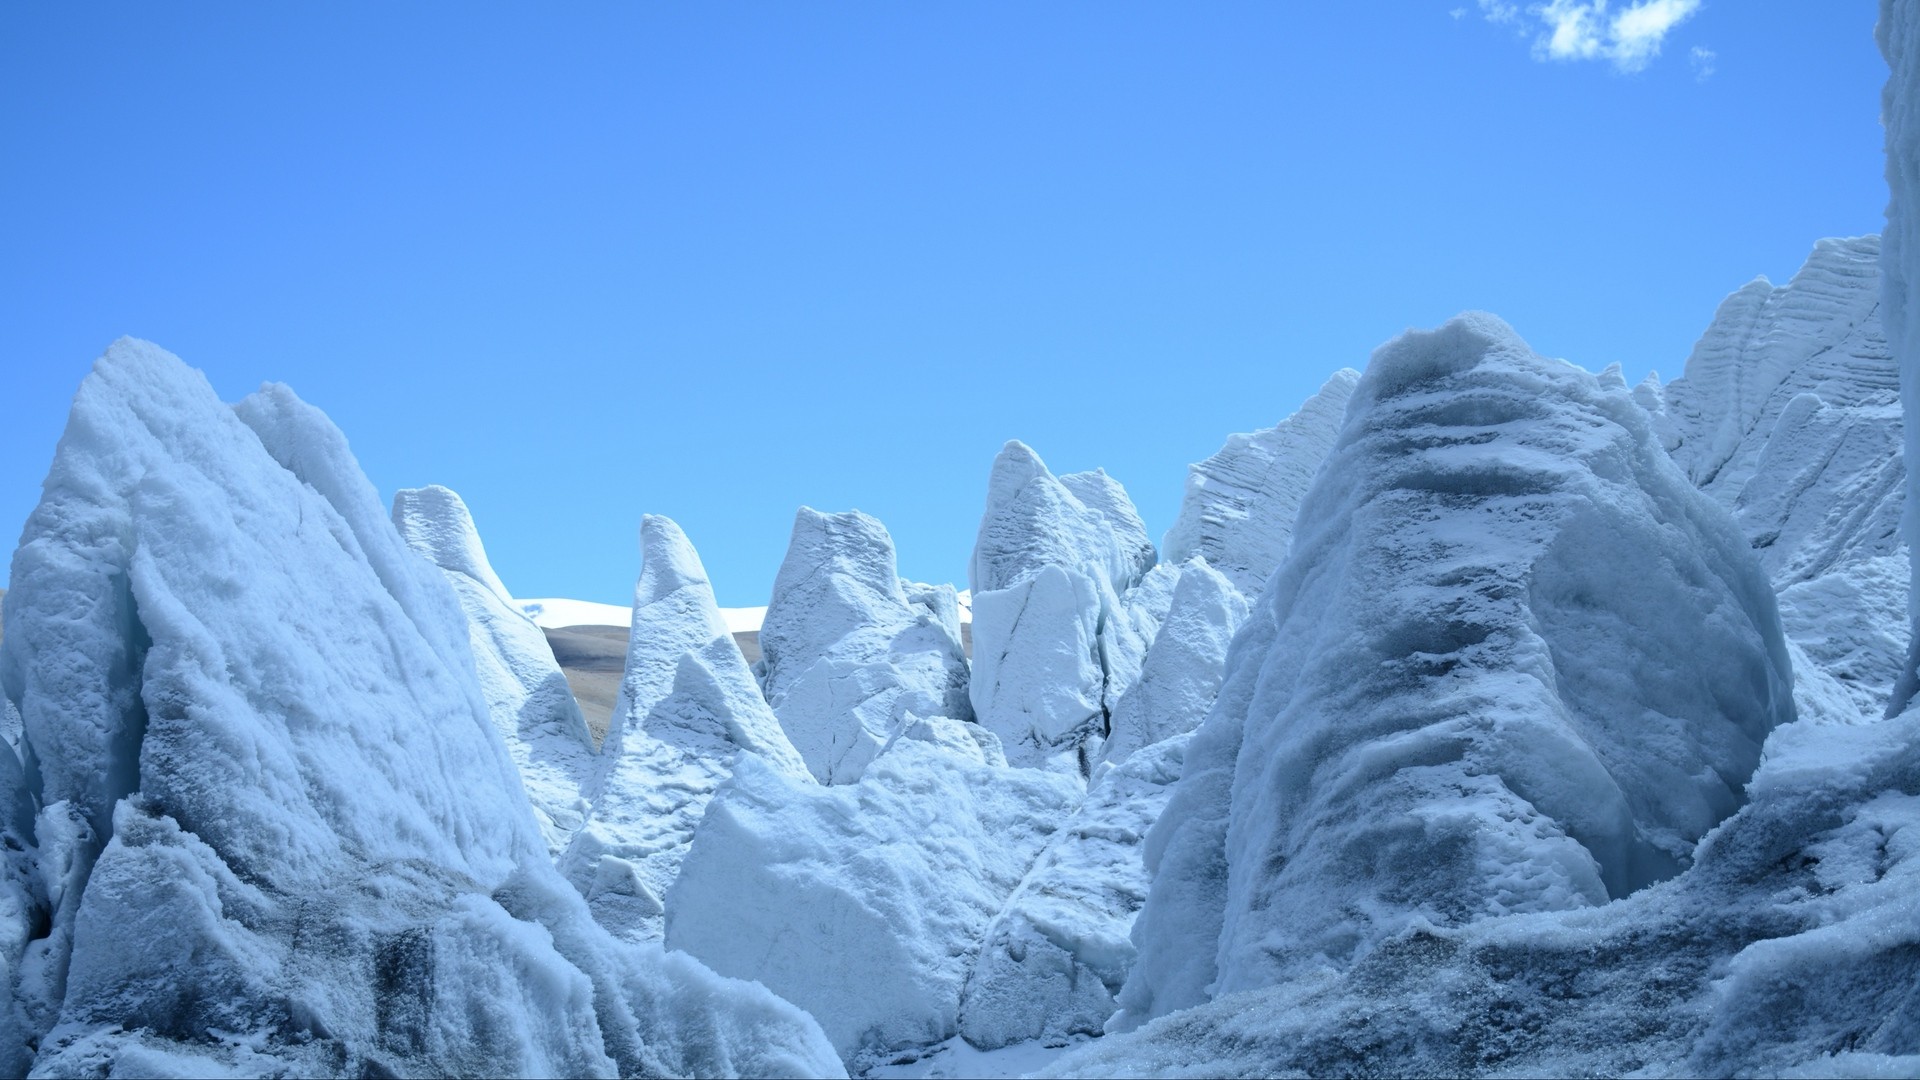 1920x1080 wallpapers: glacier, mountain, snow, sky (image)